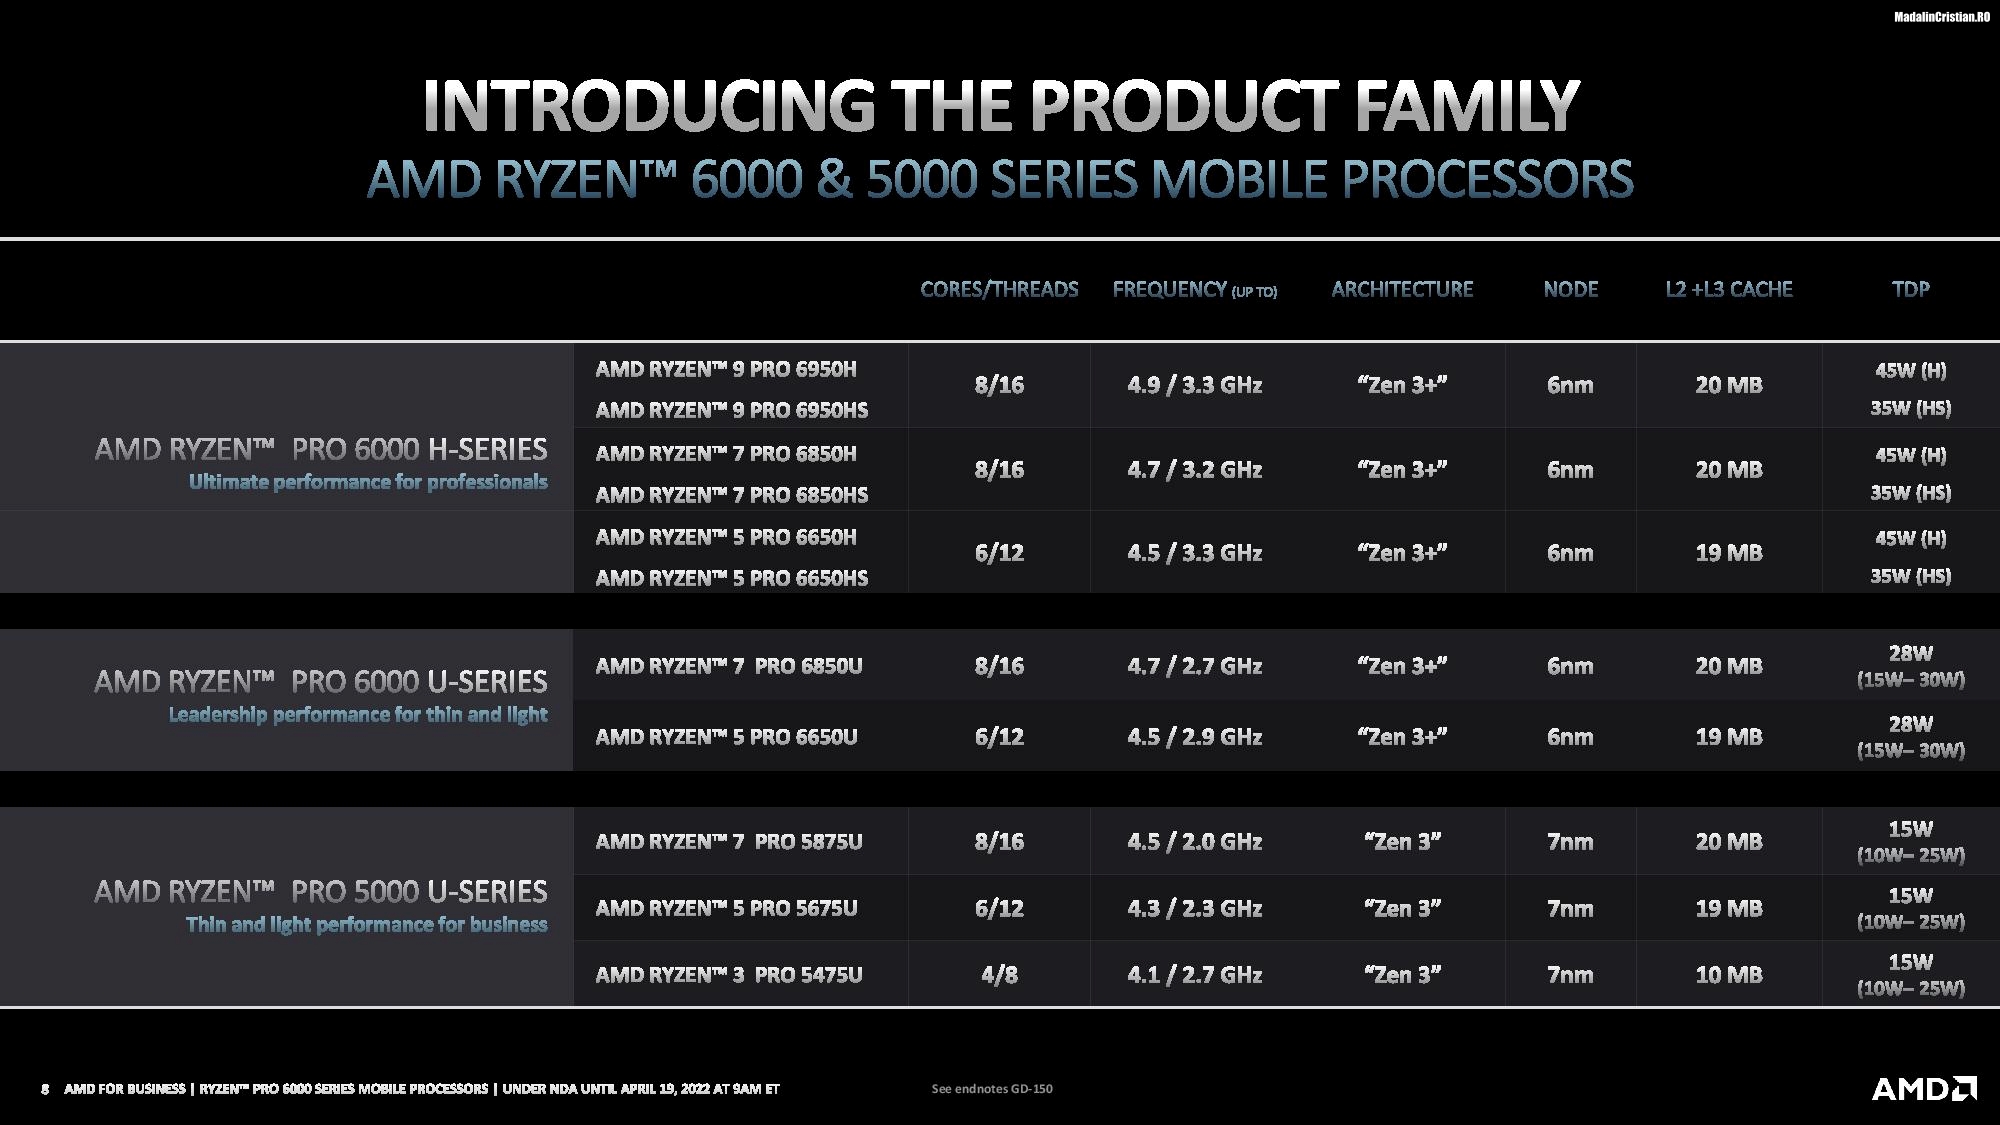 AMD Ryzen Pro 6000 family